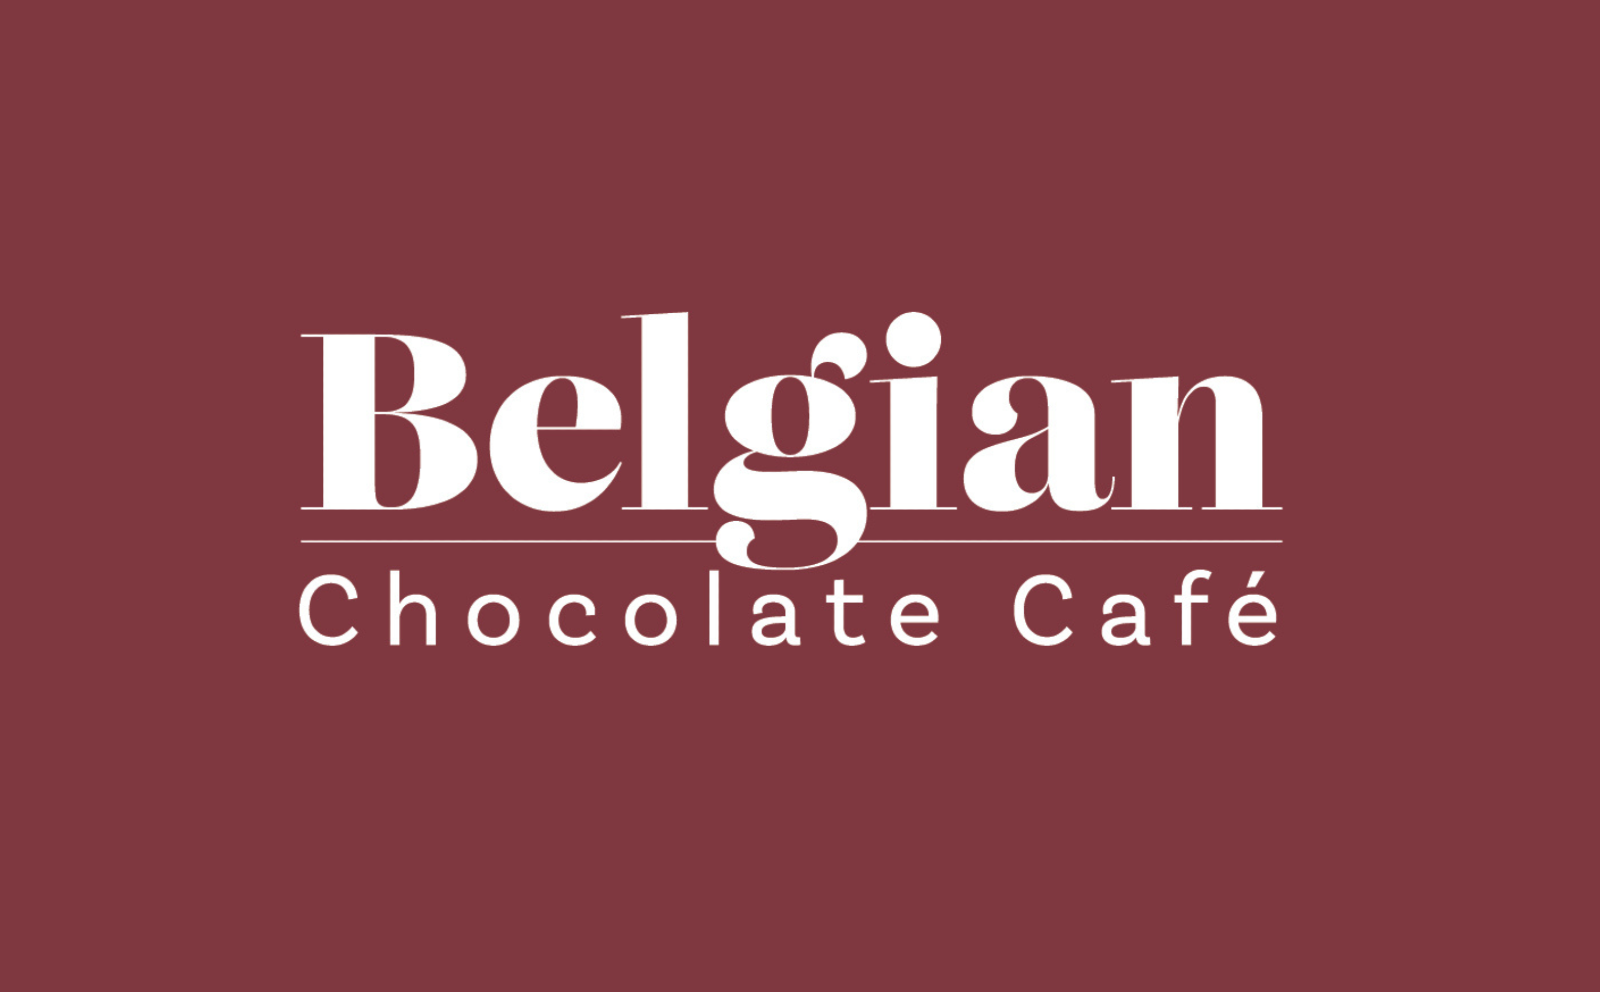 Belgian Chocolate Café